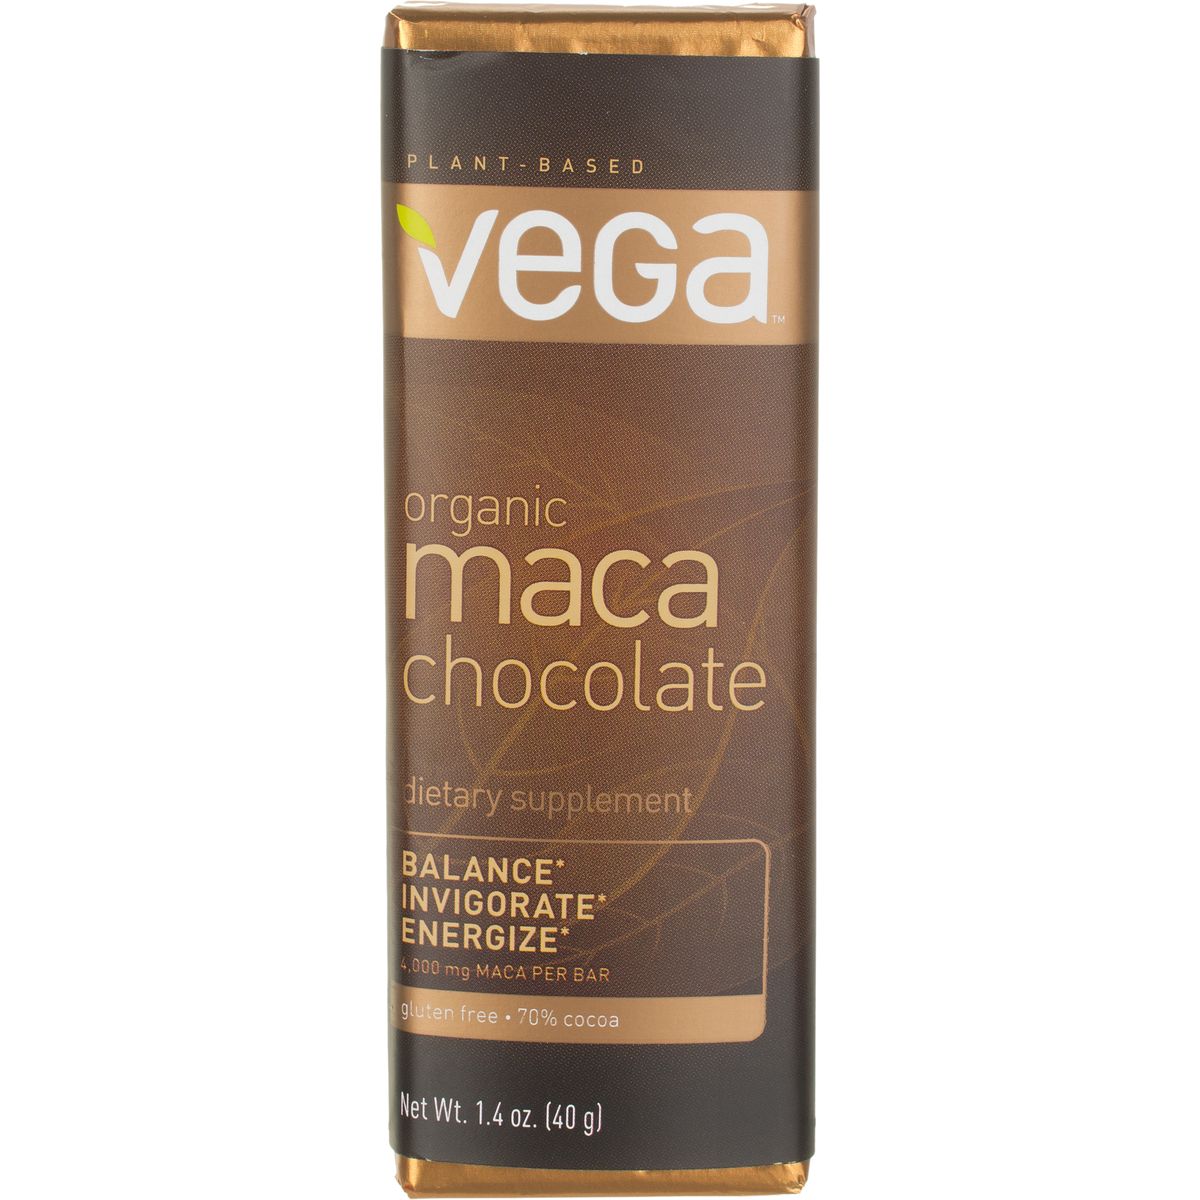 Vega Maca Chocolate Bar